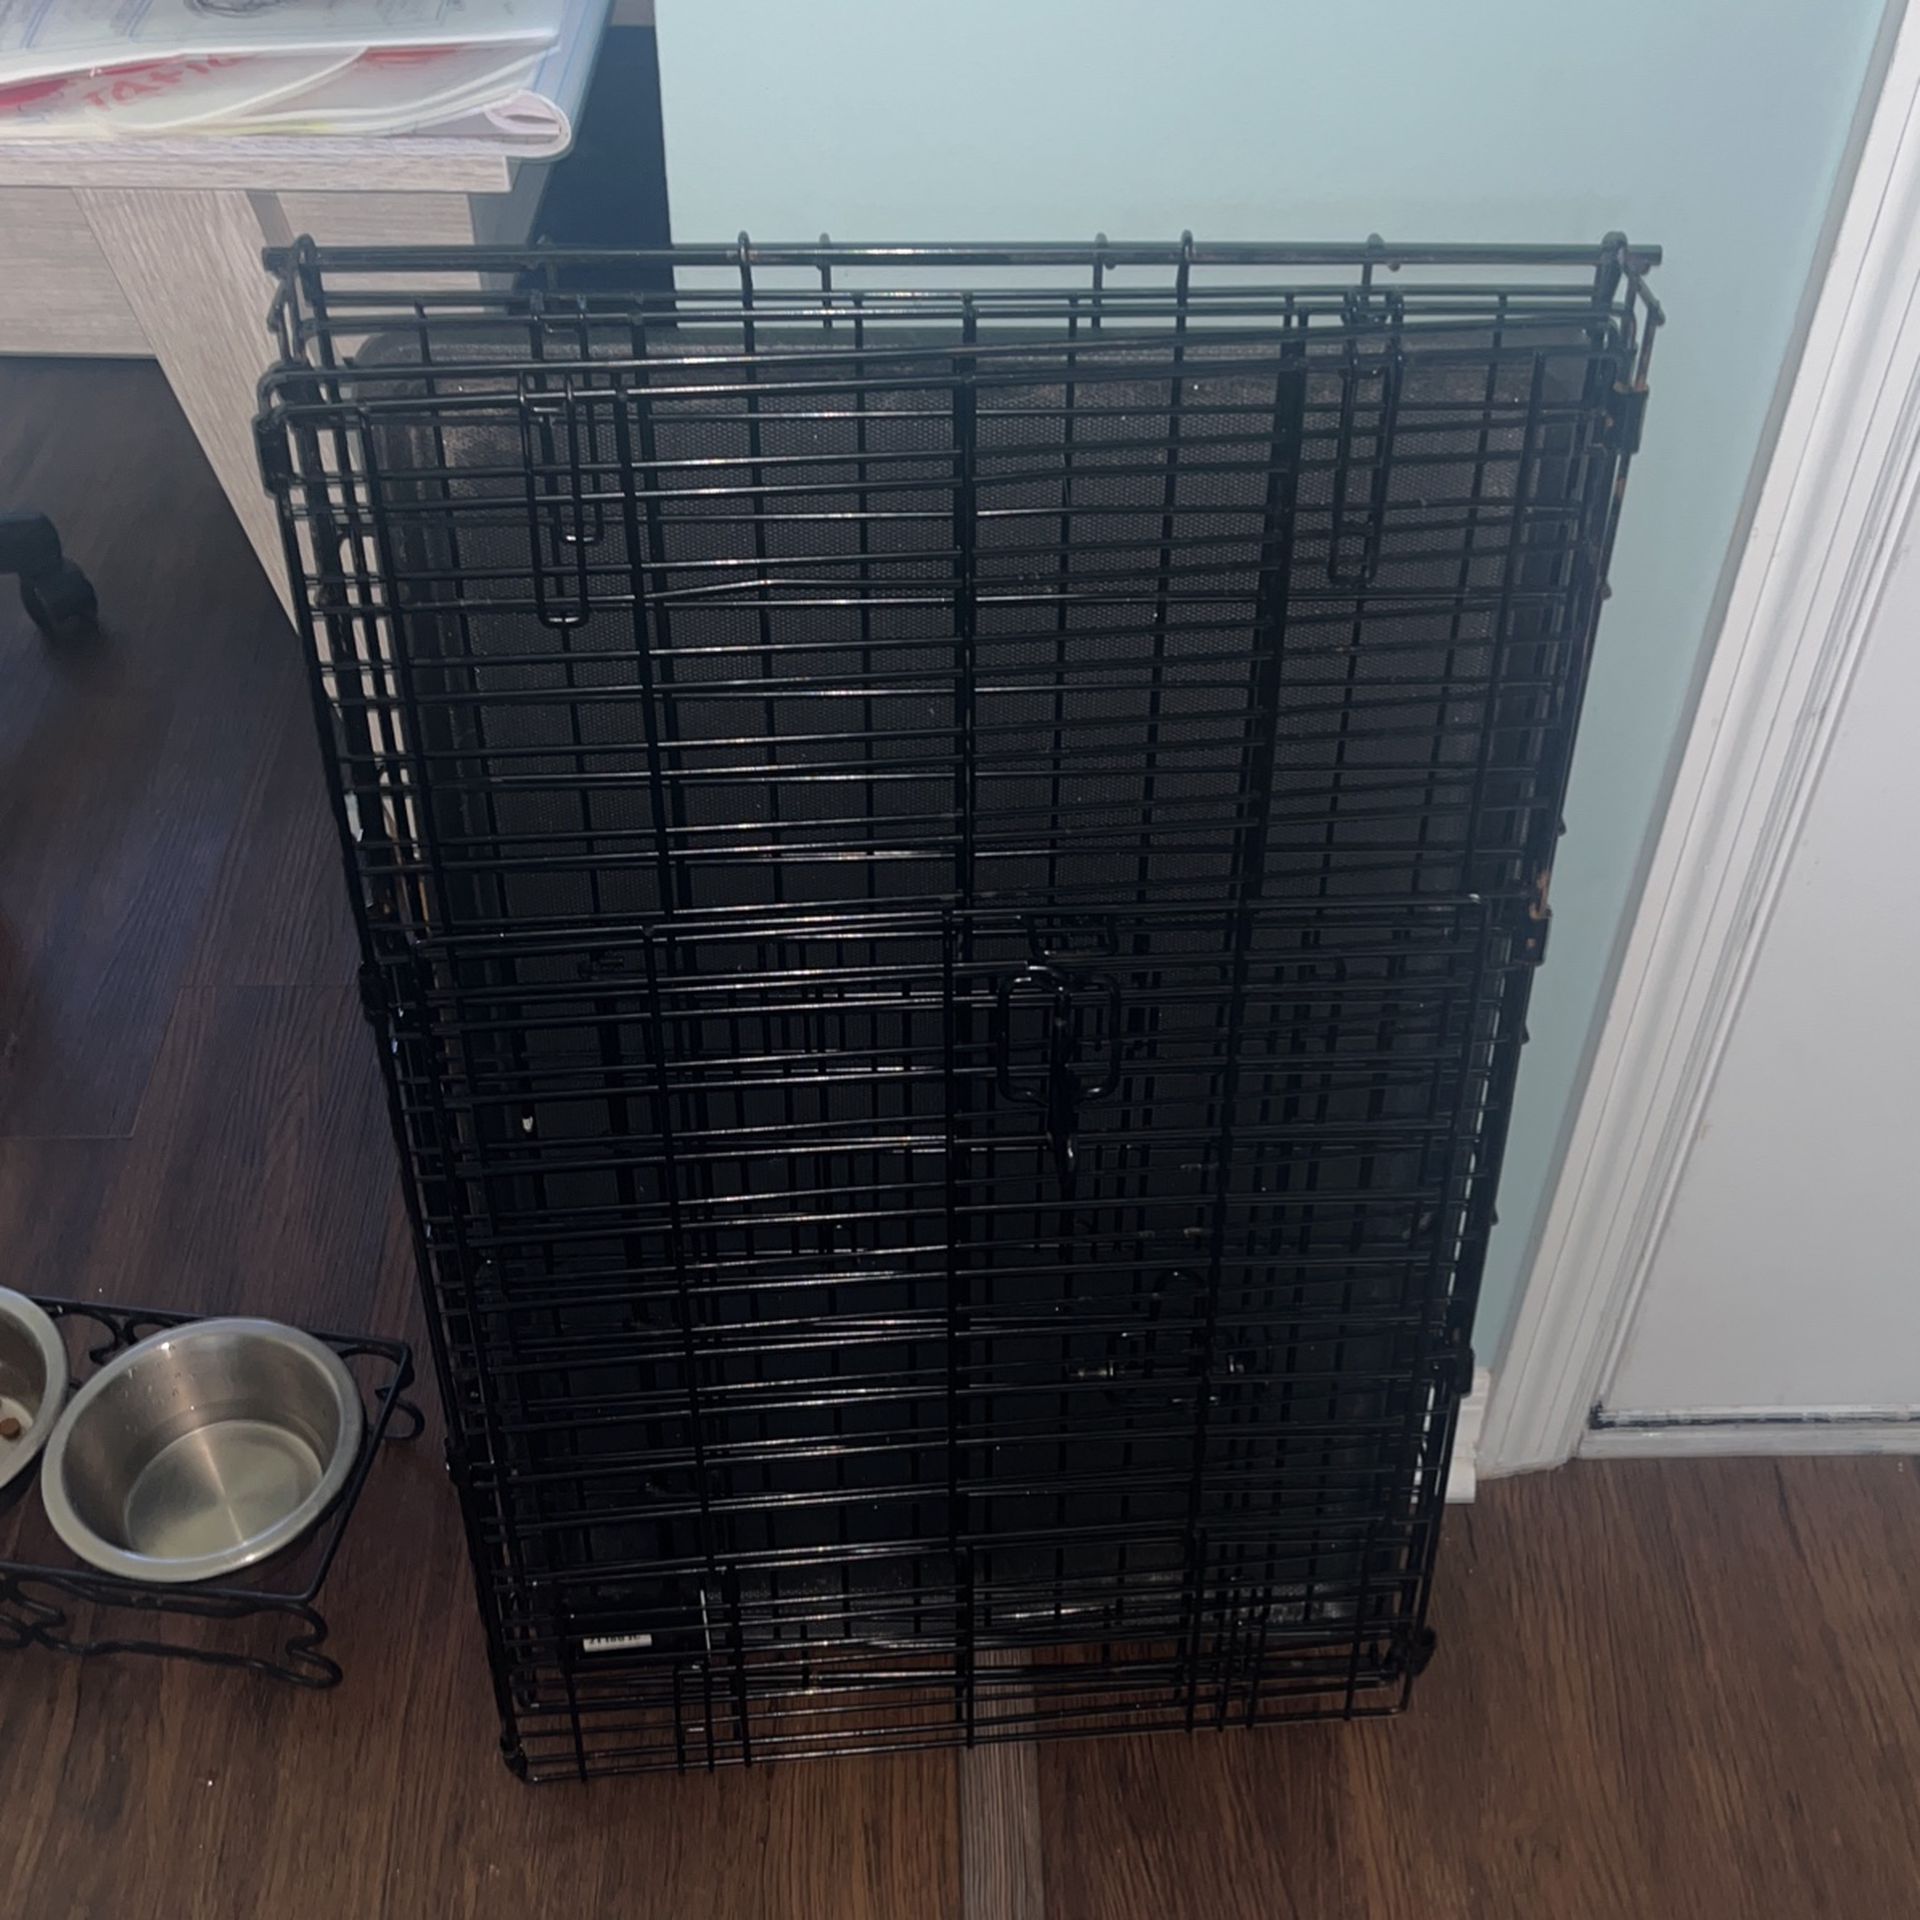 Medium Sized Dog Crate 